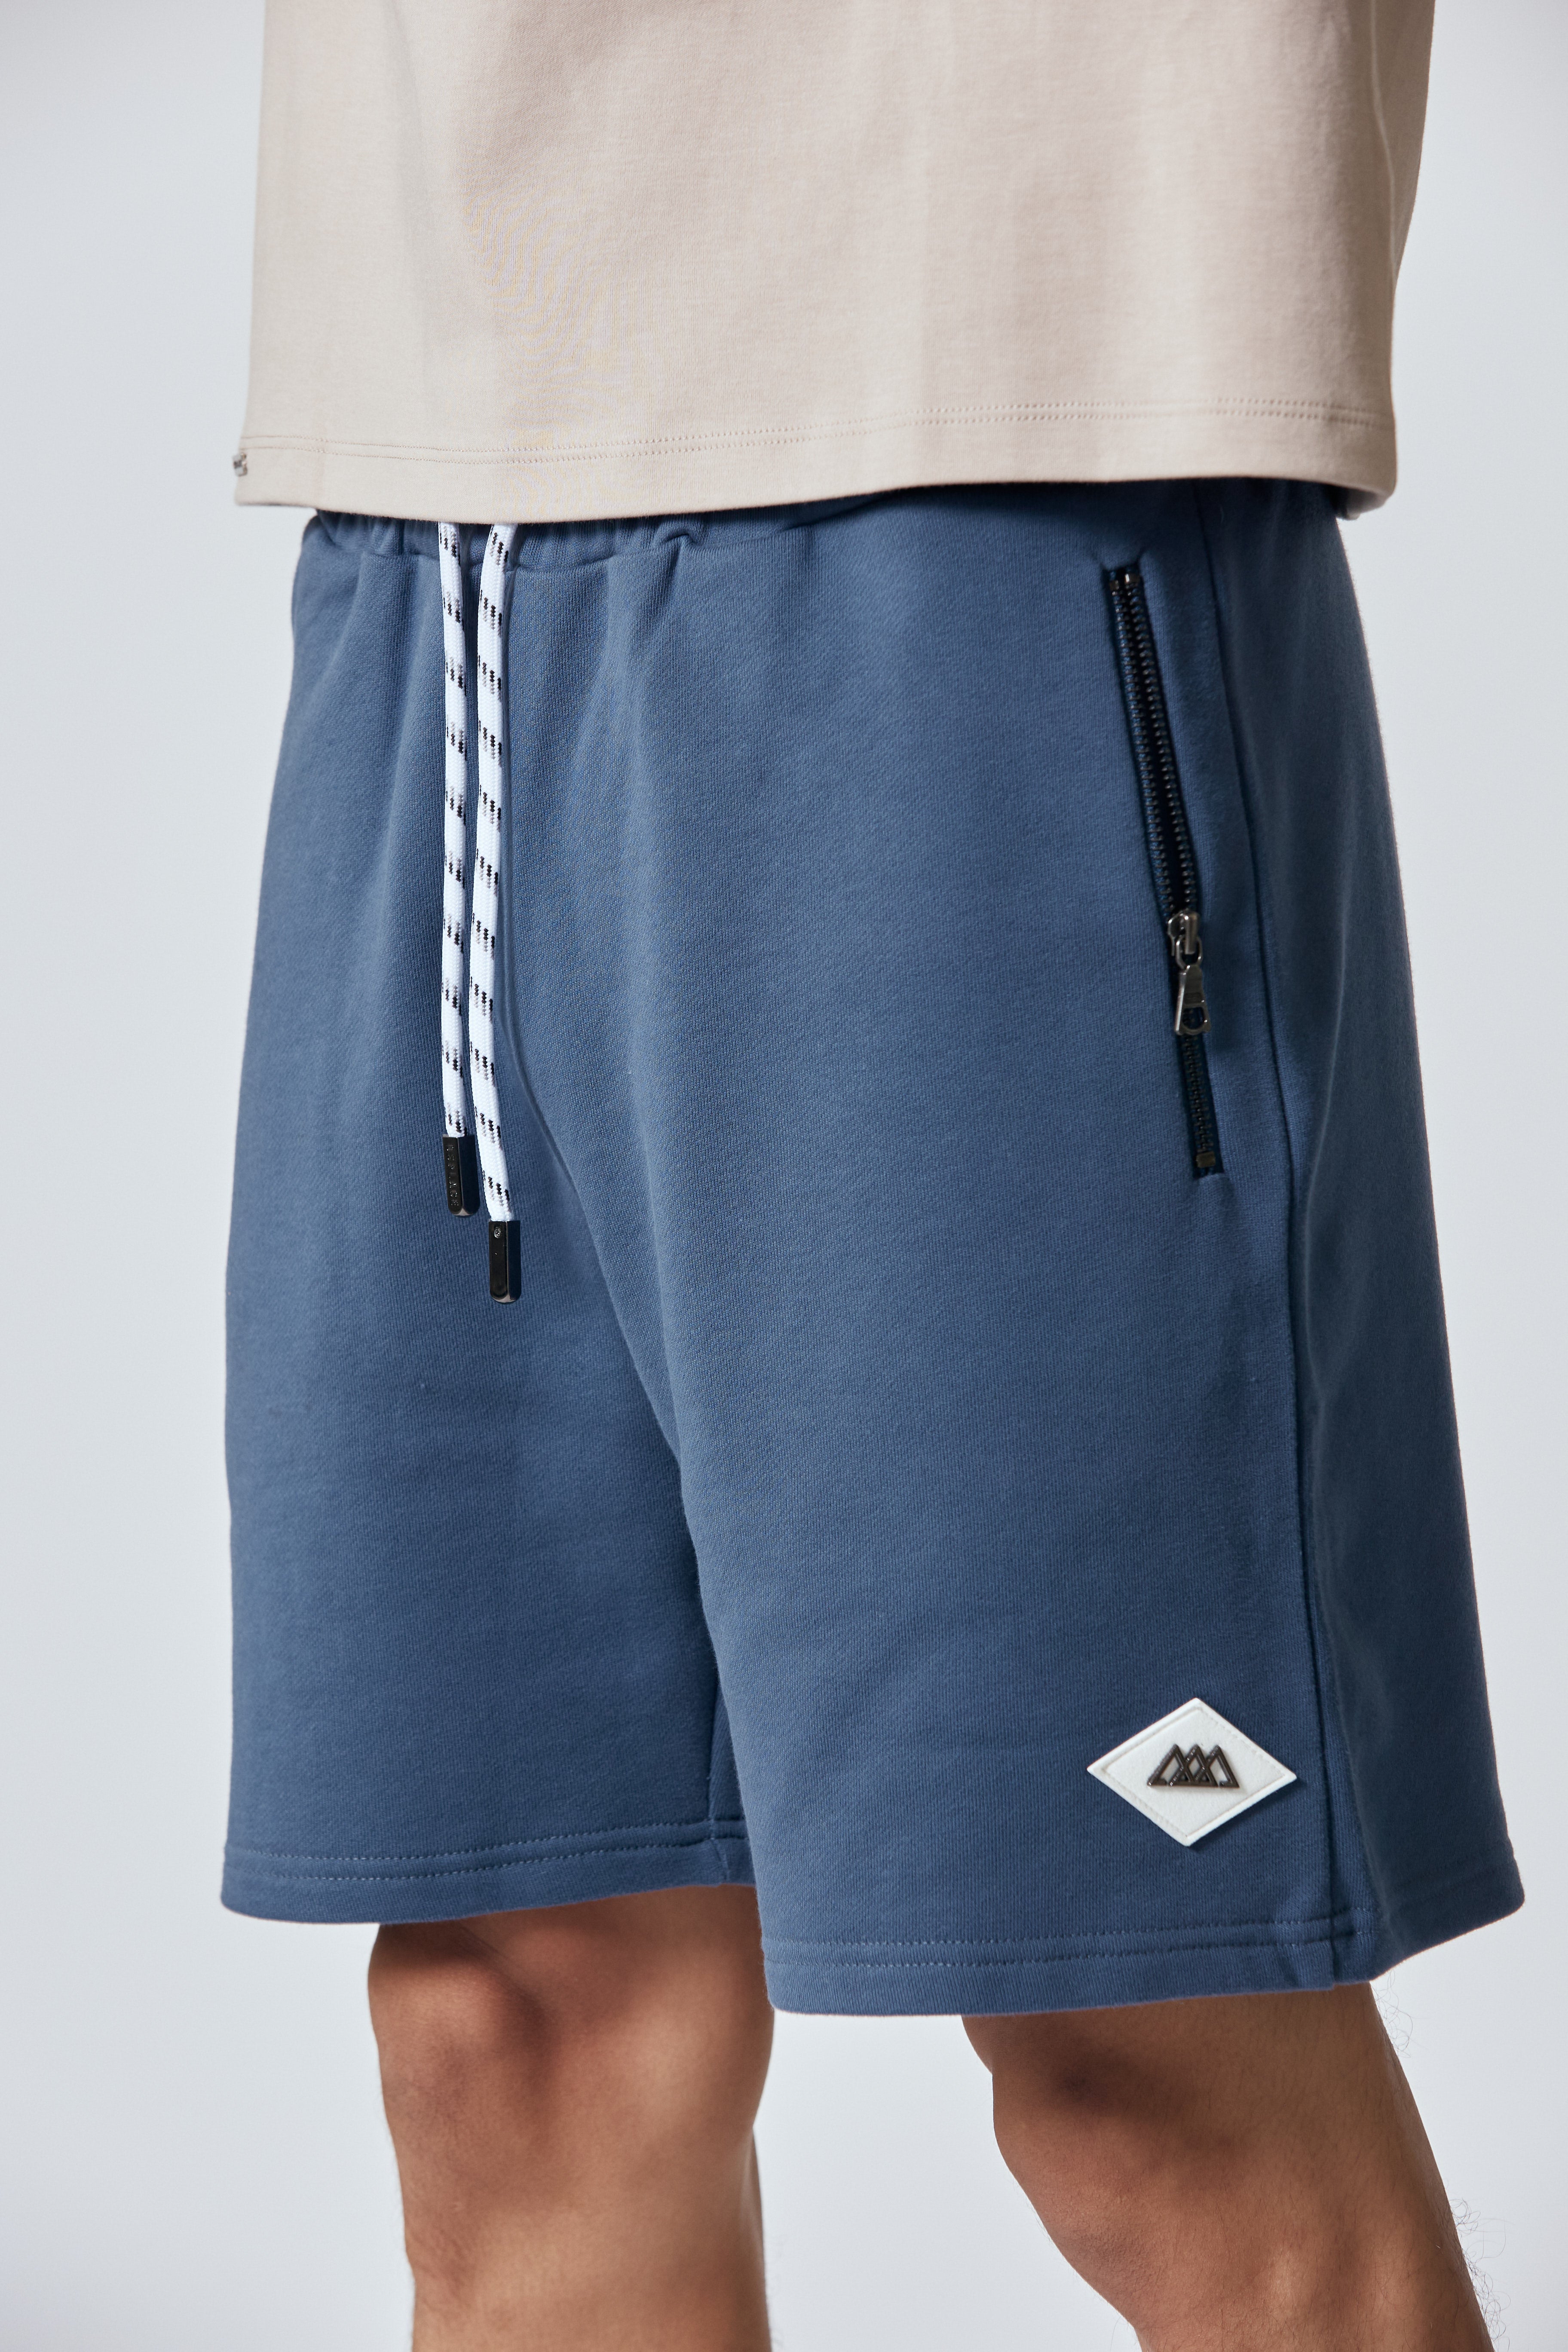 Liberty Shorts - Vintage Saphire